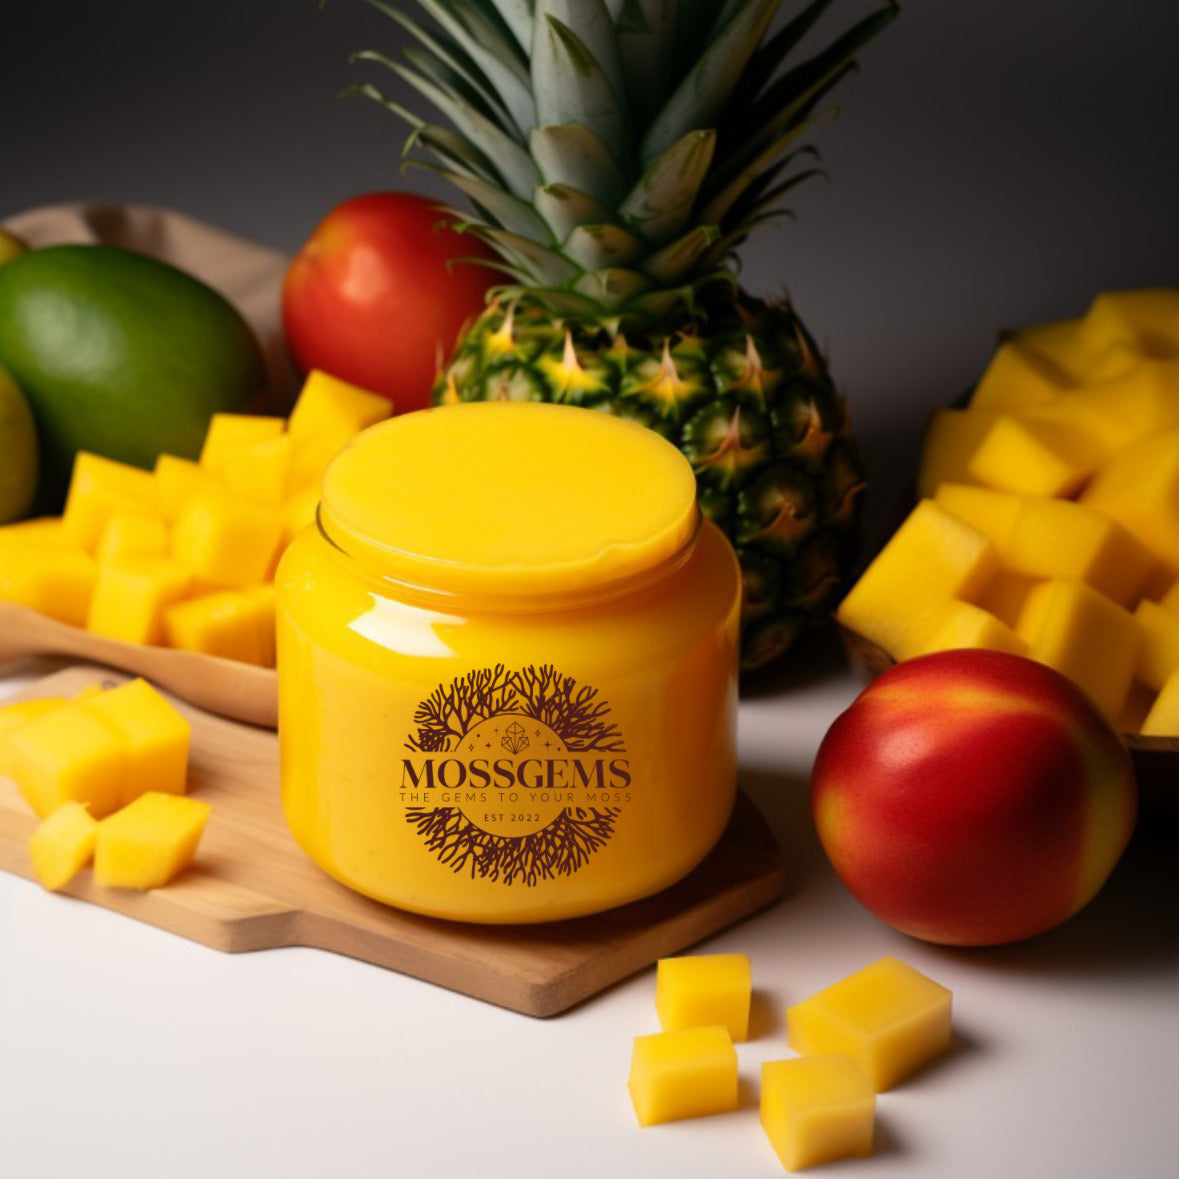 Premium Sea Moss Gel - Pineapple & Mango Infused 380ml